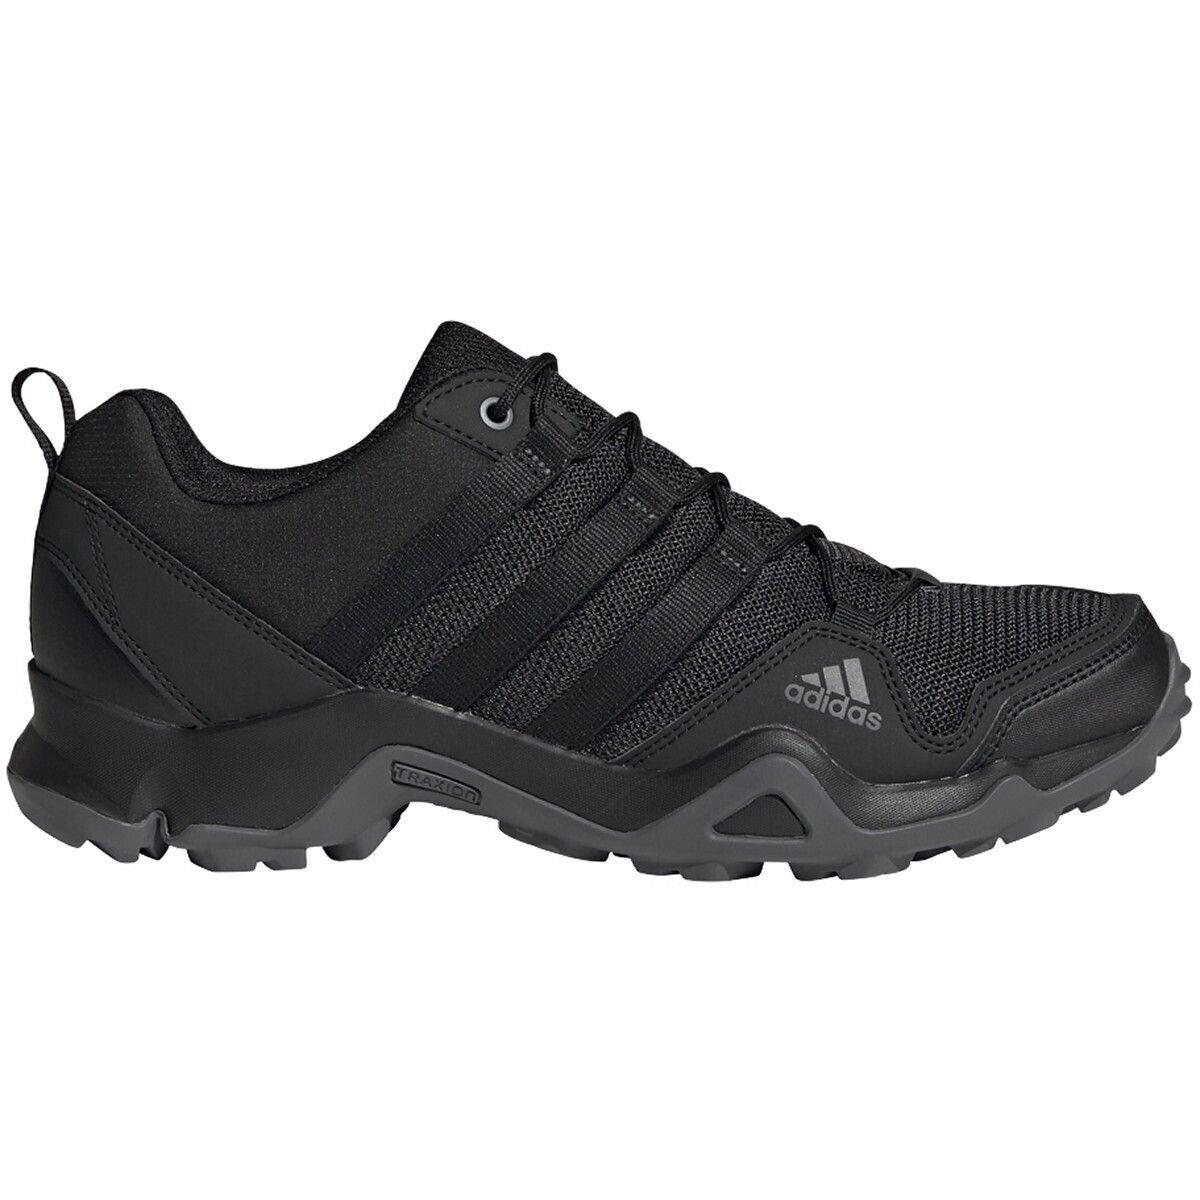 Adidas AX2S Men s Hiking Shoes Sz 9.5 Sneakers Black / Dark Grey 587